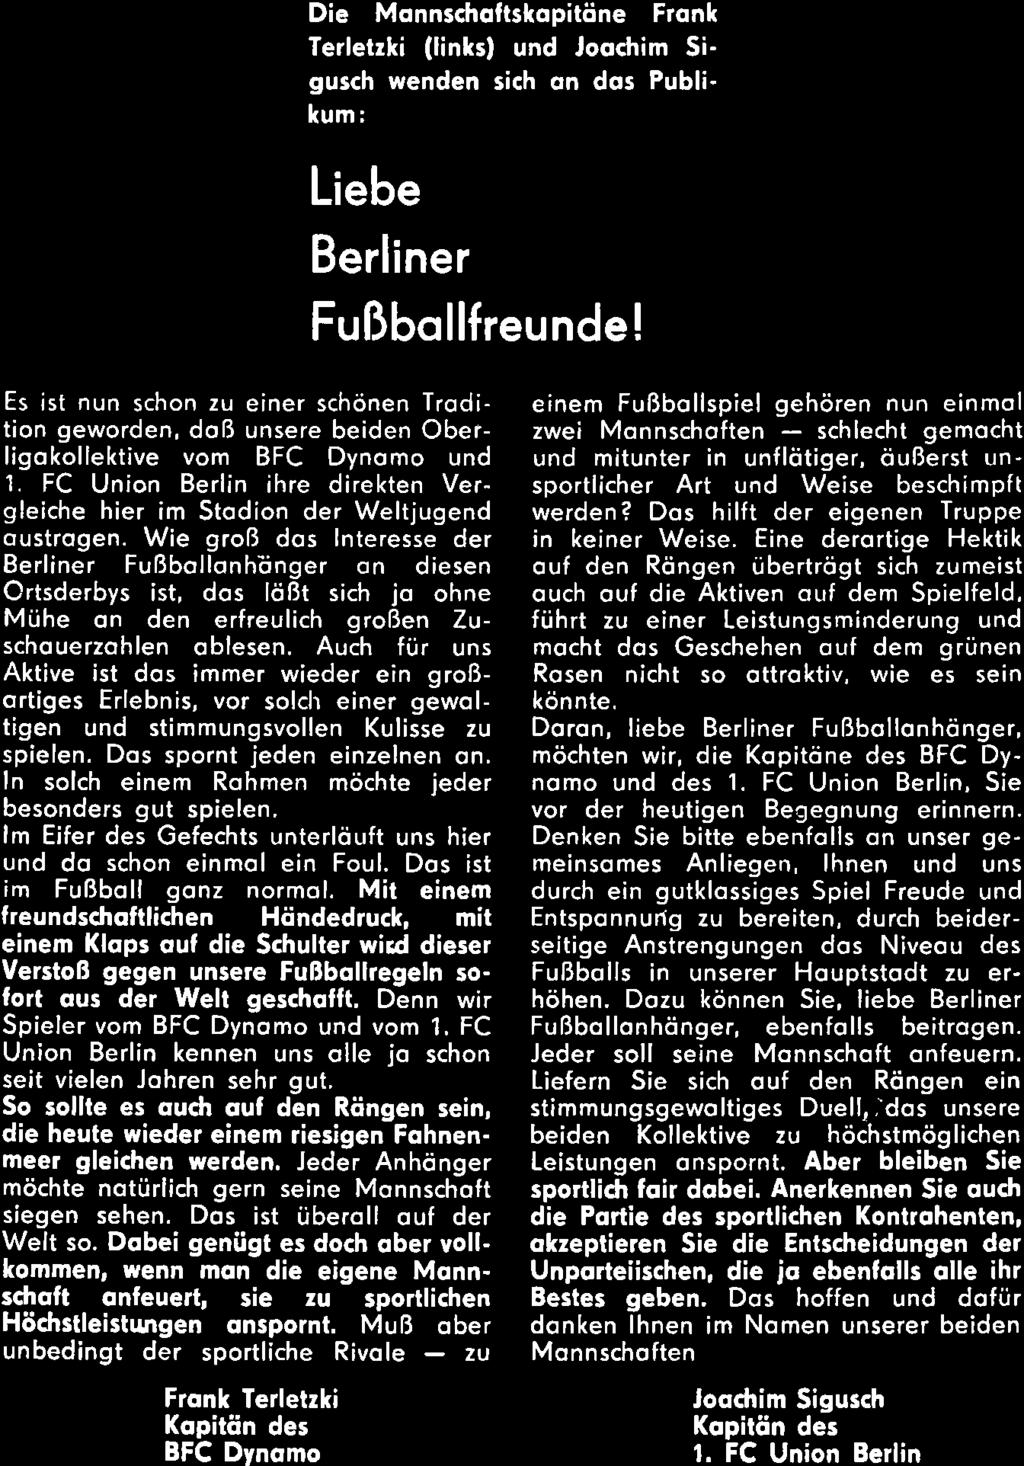 Fronk Terletzki Kopitön des BFC Dynomo Liebe Berliner Fußbollfreunde!